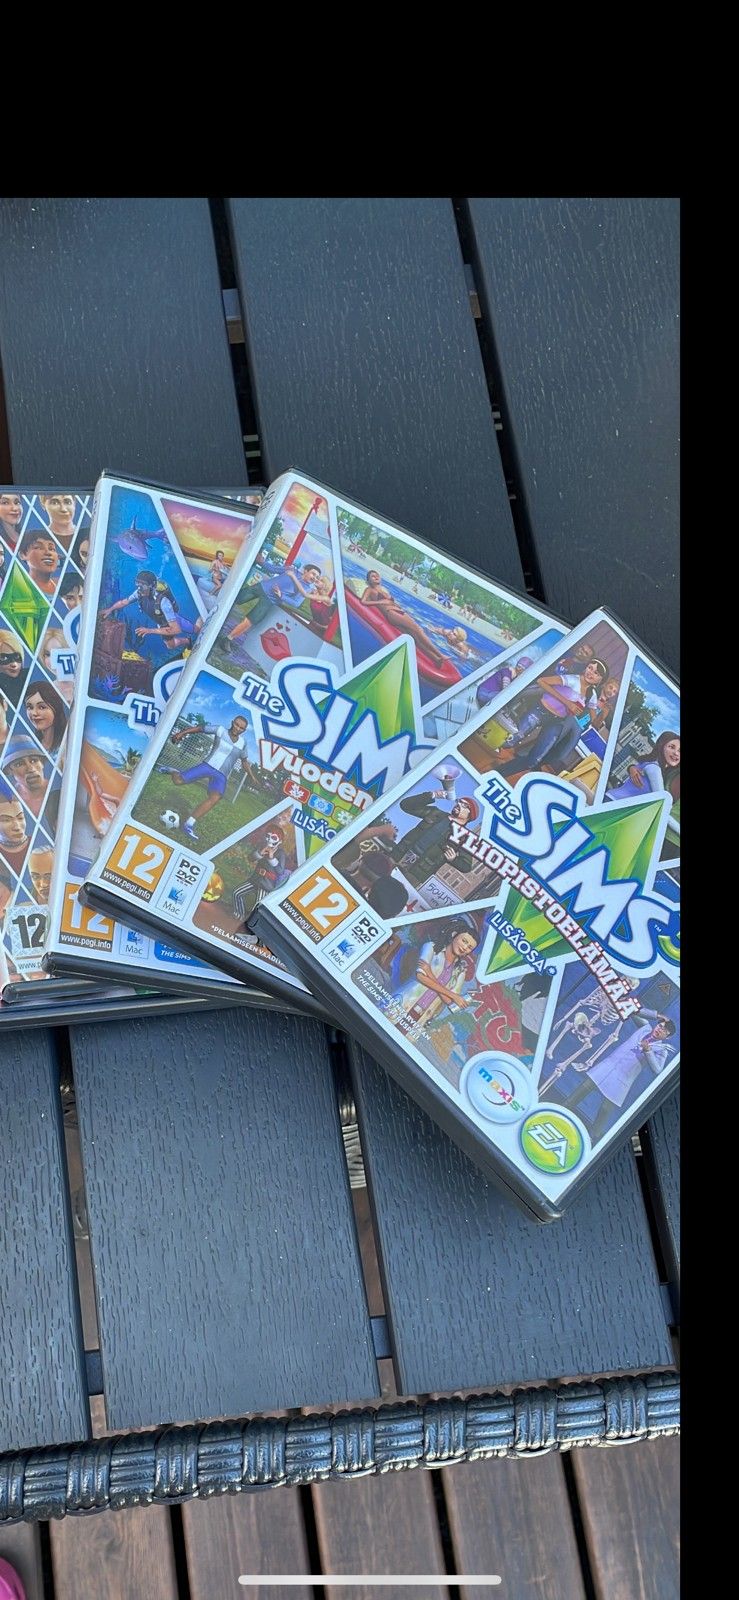 Sims pc-pelit 6kpl